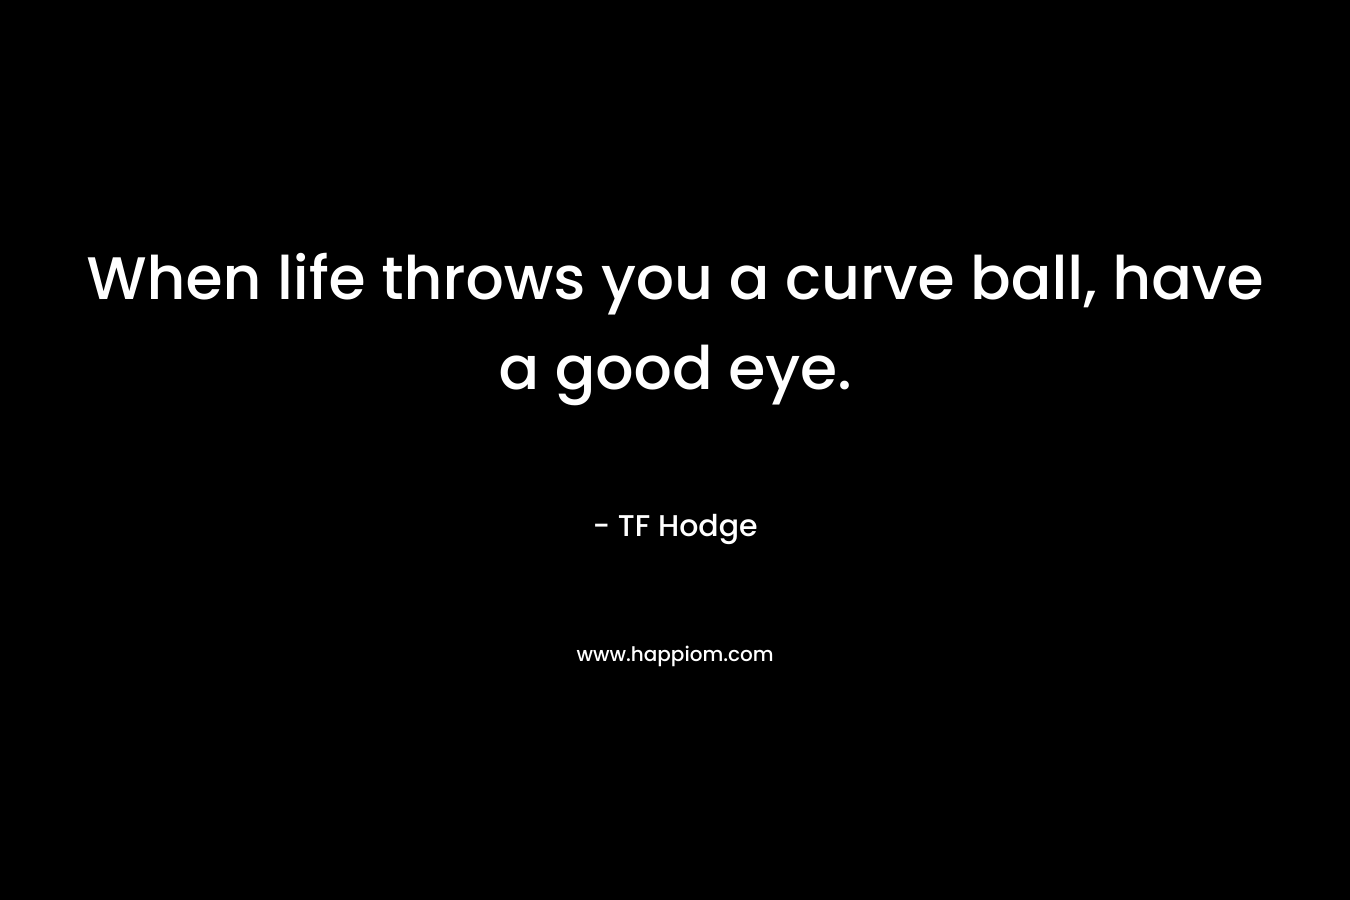 When life throws you a curve ball, have a good eye.